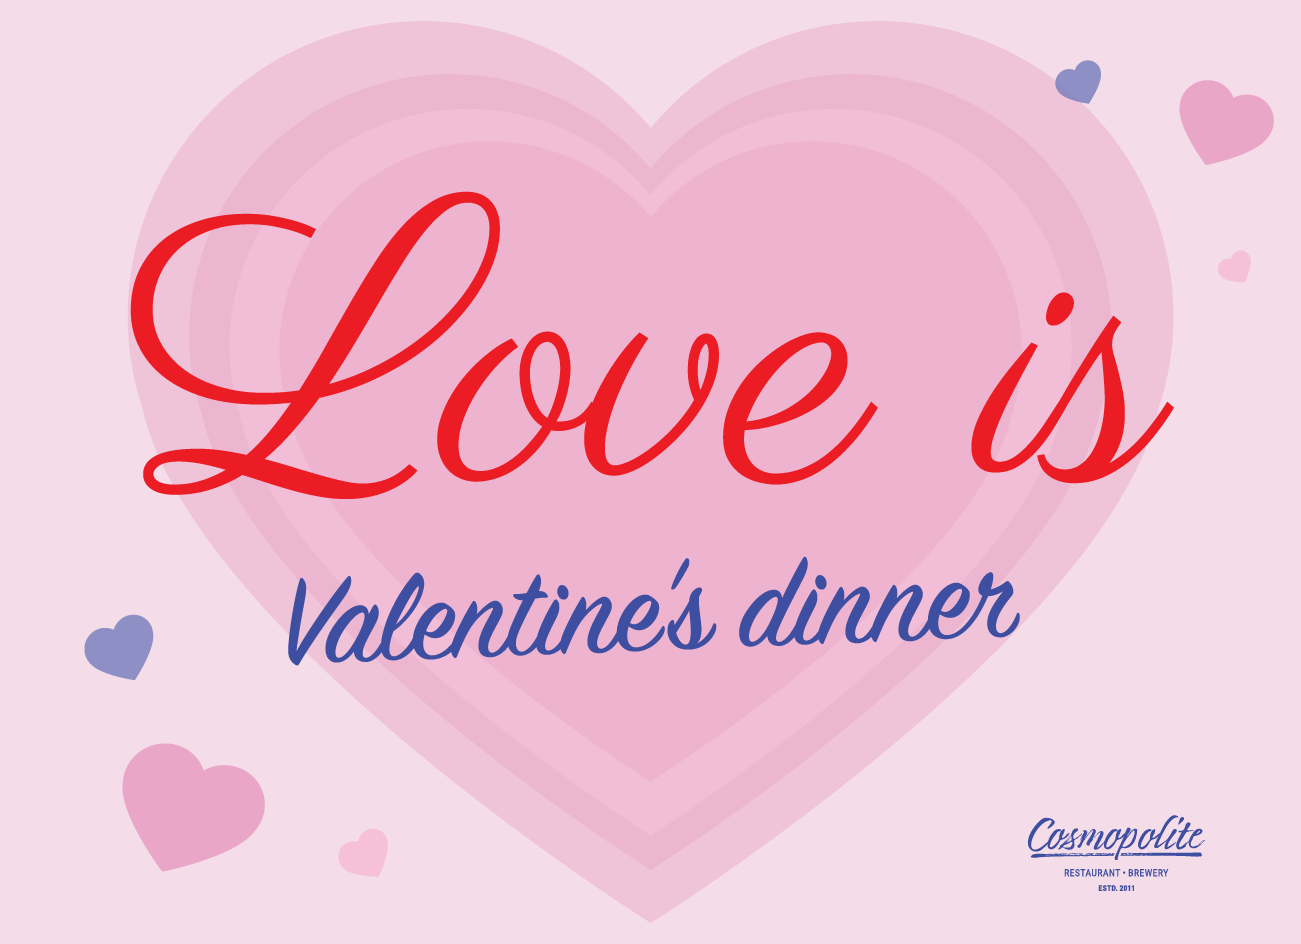 Valentine's day at Cosmopolite: Love is...